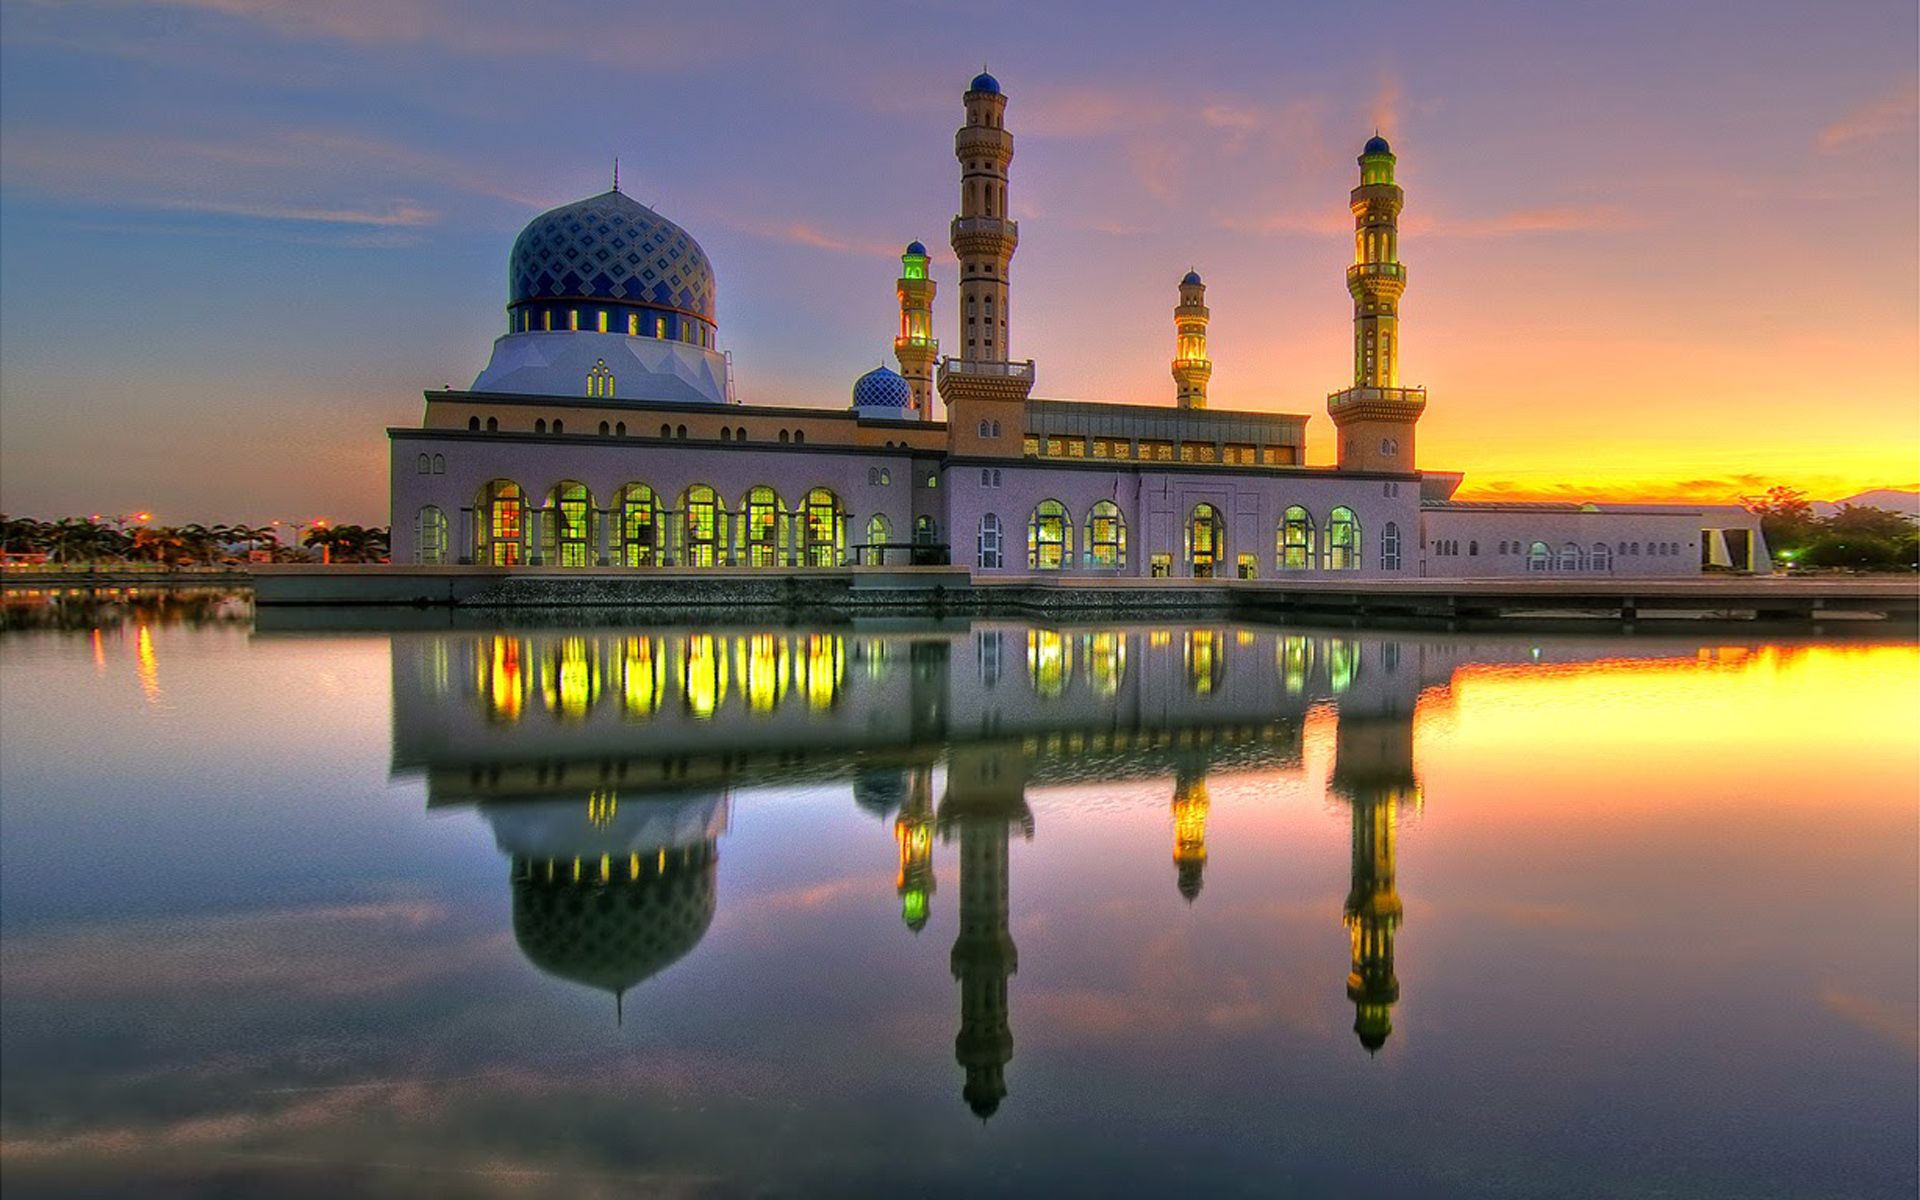 City Mosque Bandaraya Kota Kinabalu Is The Second Main Mosque